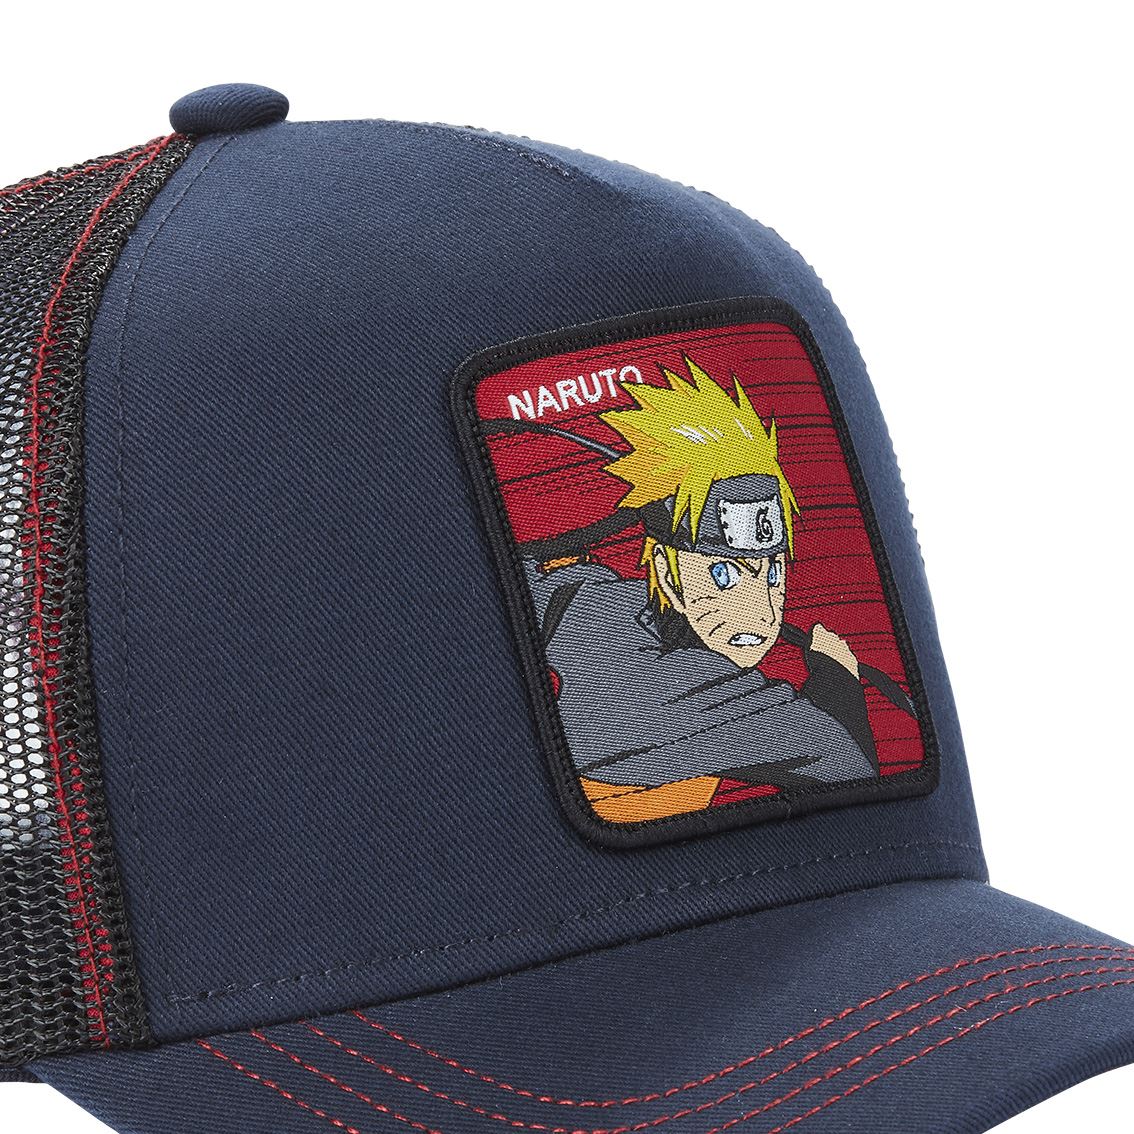 Naruto Navy Naruto Shippuden Trucker Cap Capslab